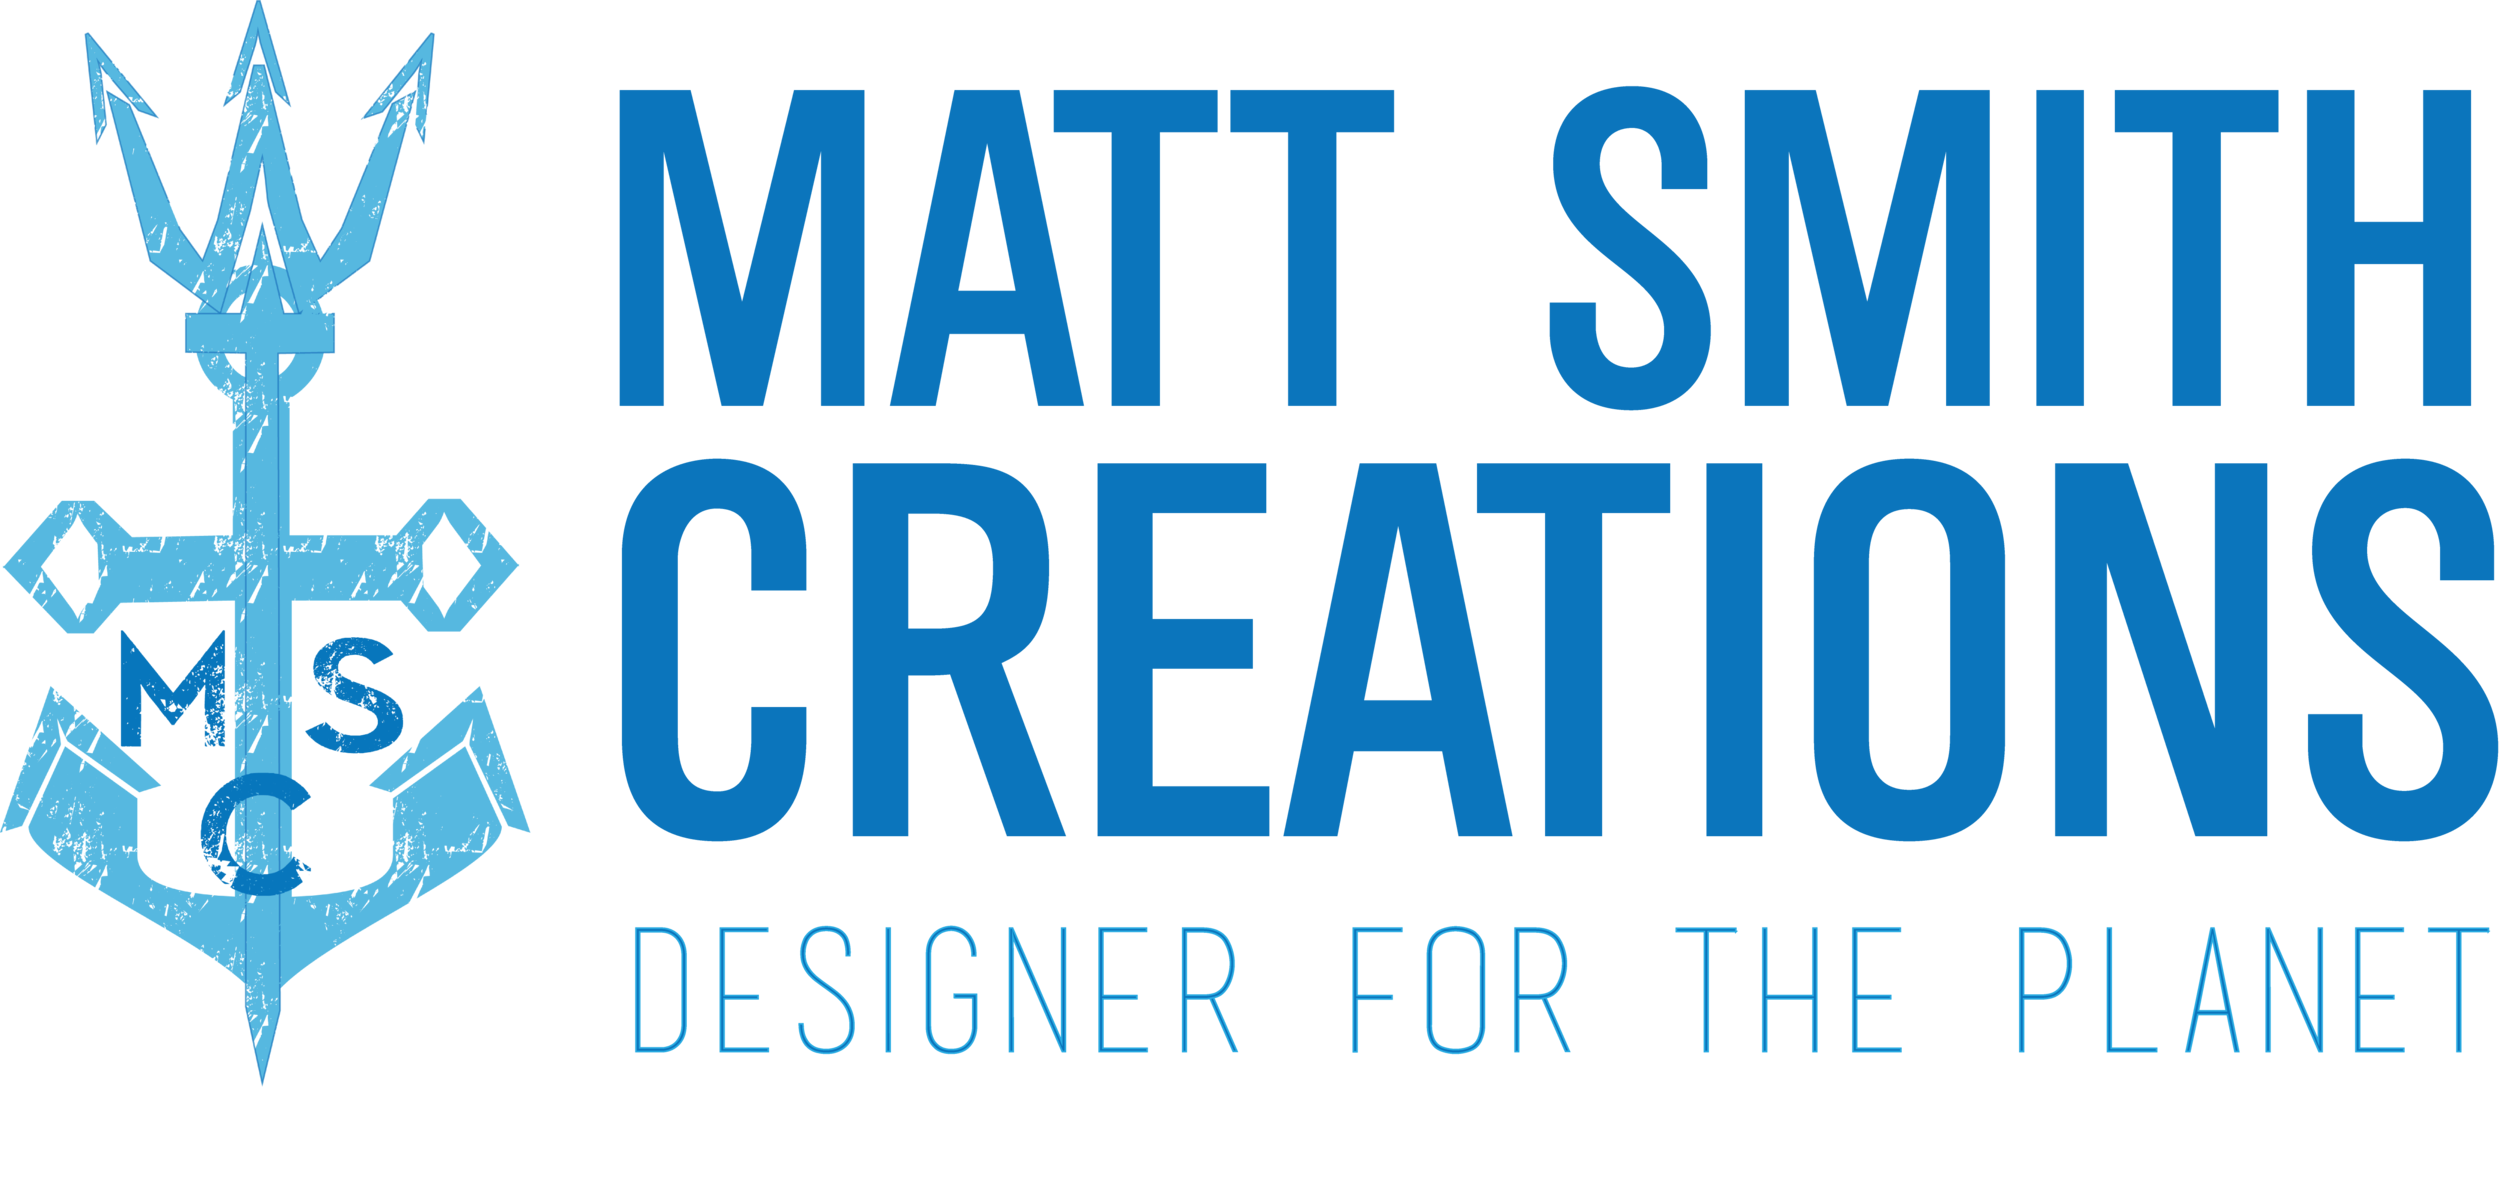 Matt Smith Creations